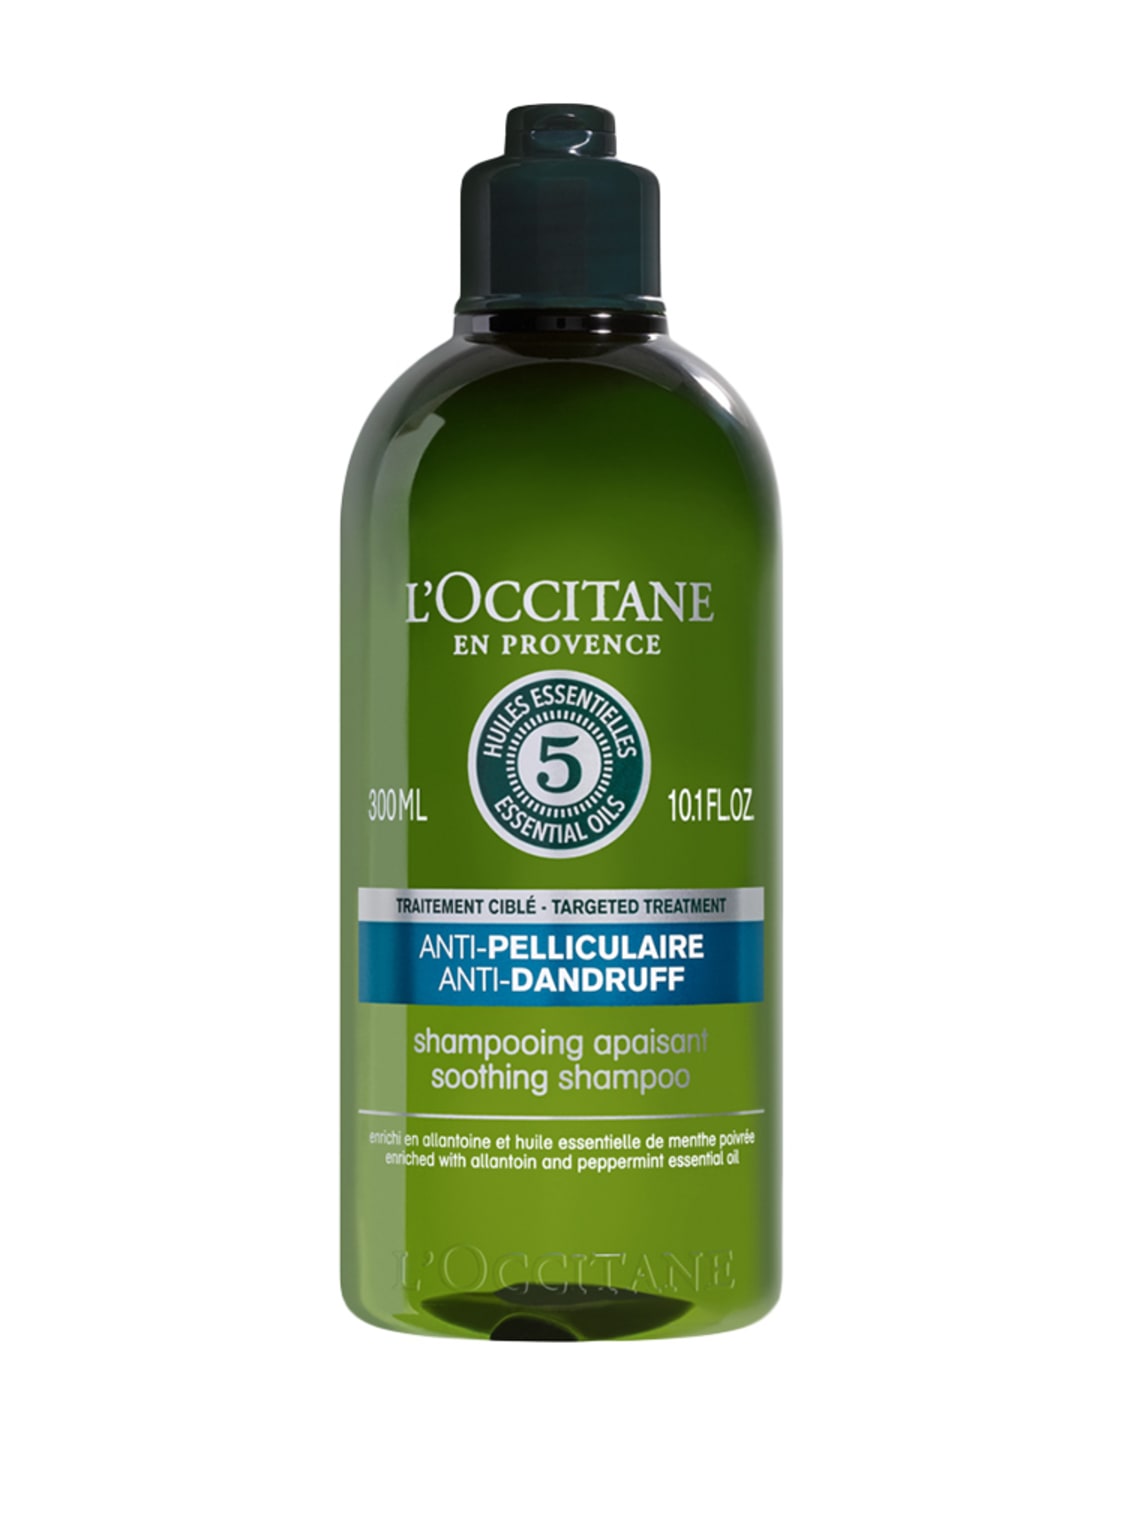 L'occitane Anti-Schuppen Shampoo 300 ml von L'Occitane